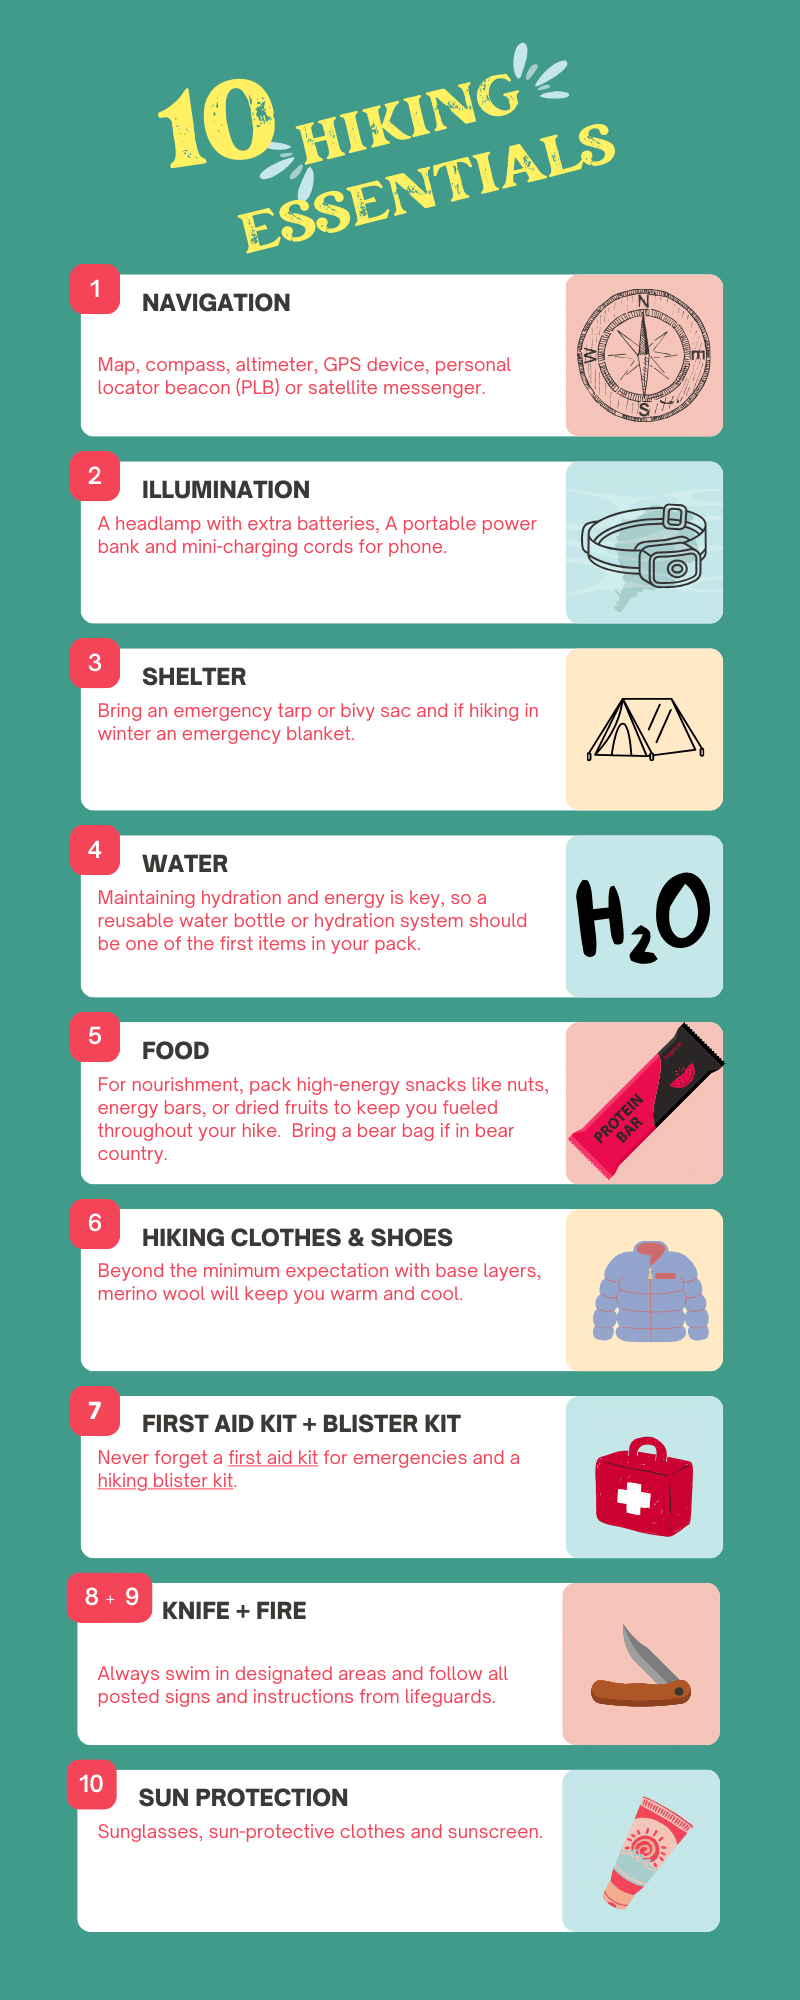 10 hiking essentials list